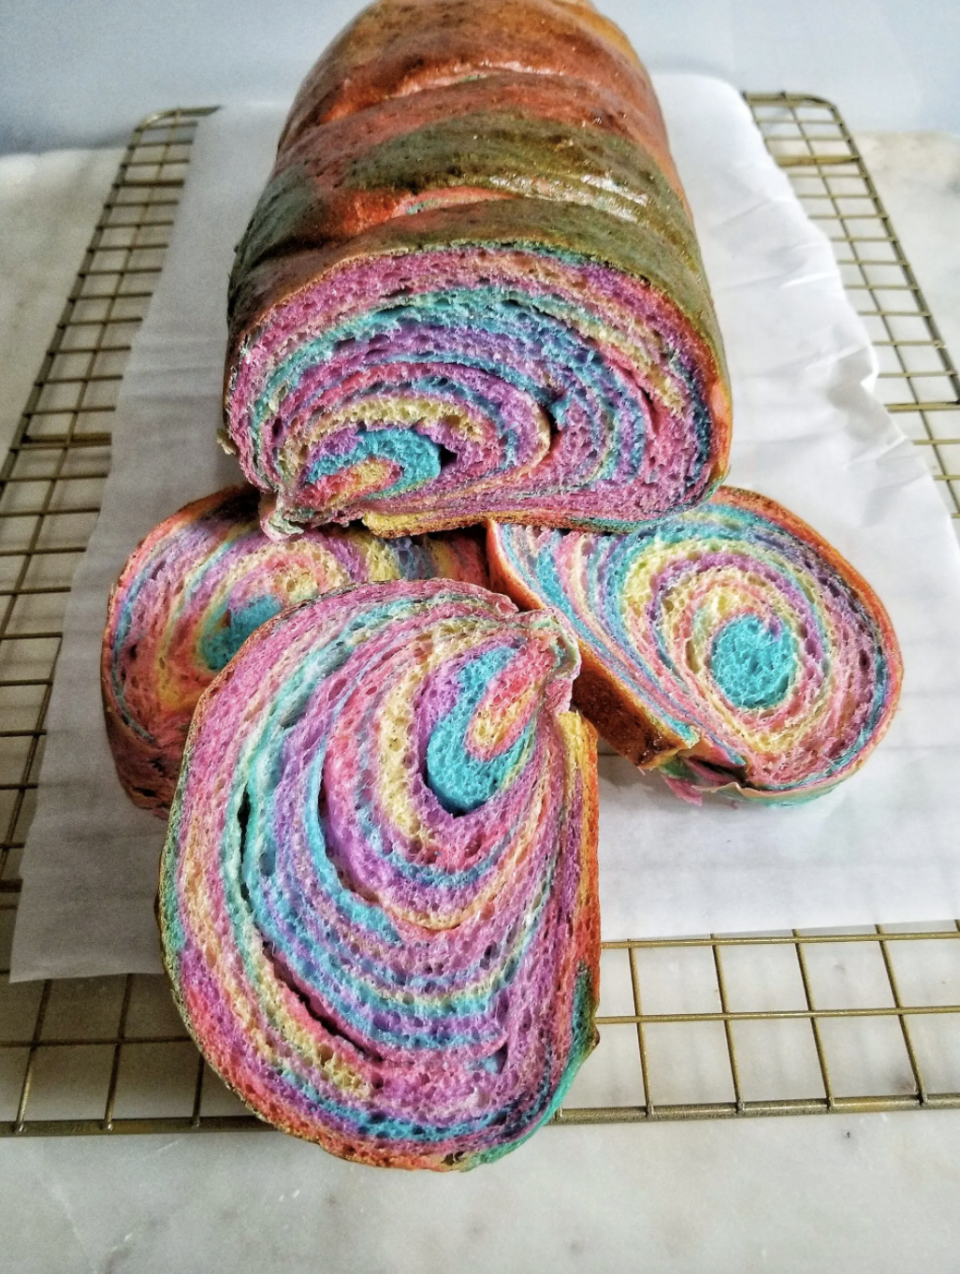 11) Rainbow Bread